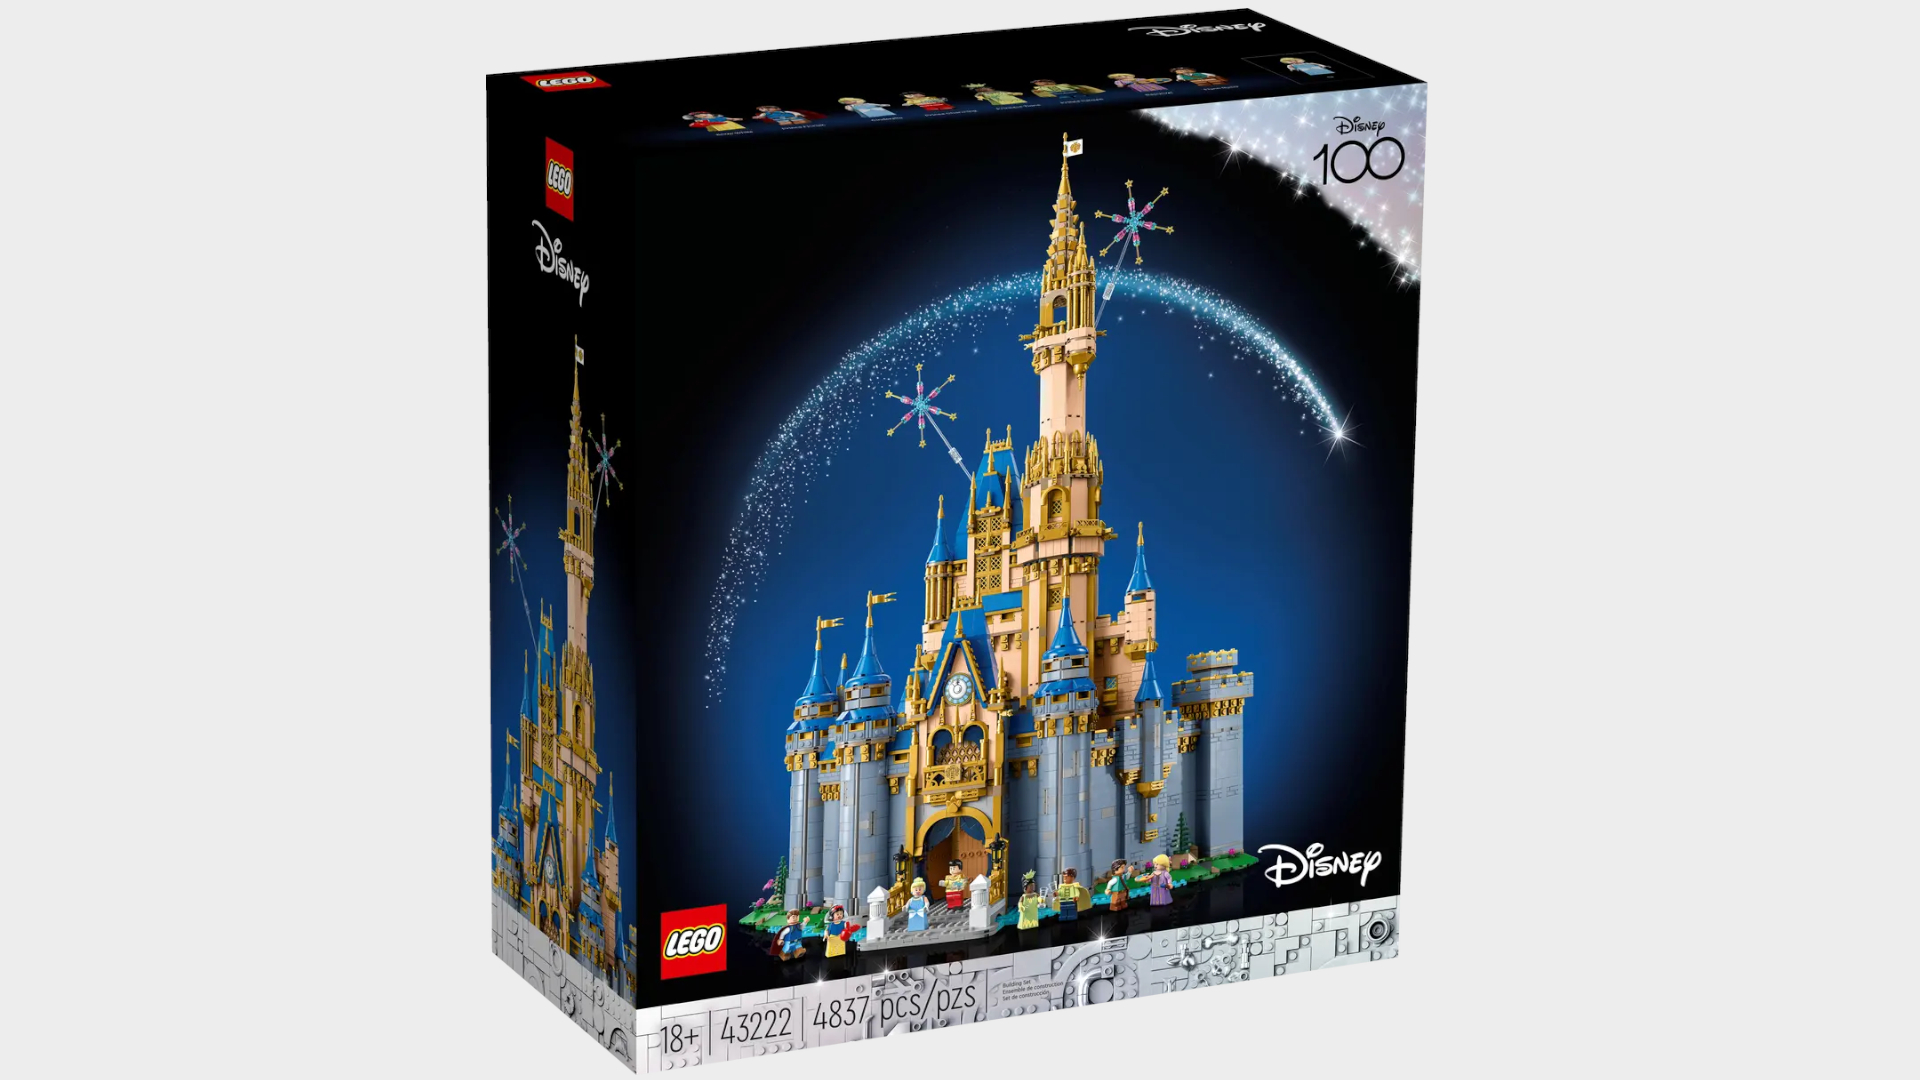 Lego Disney Castle box on a plain background